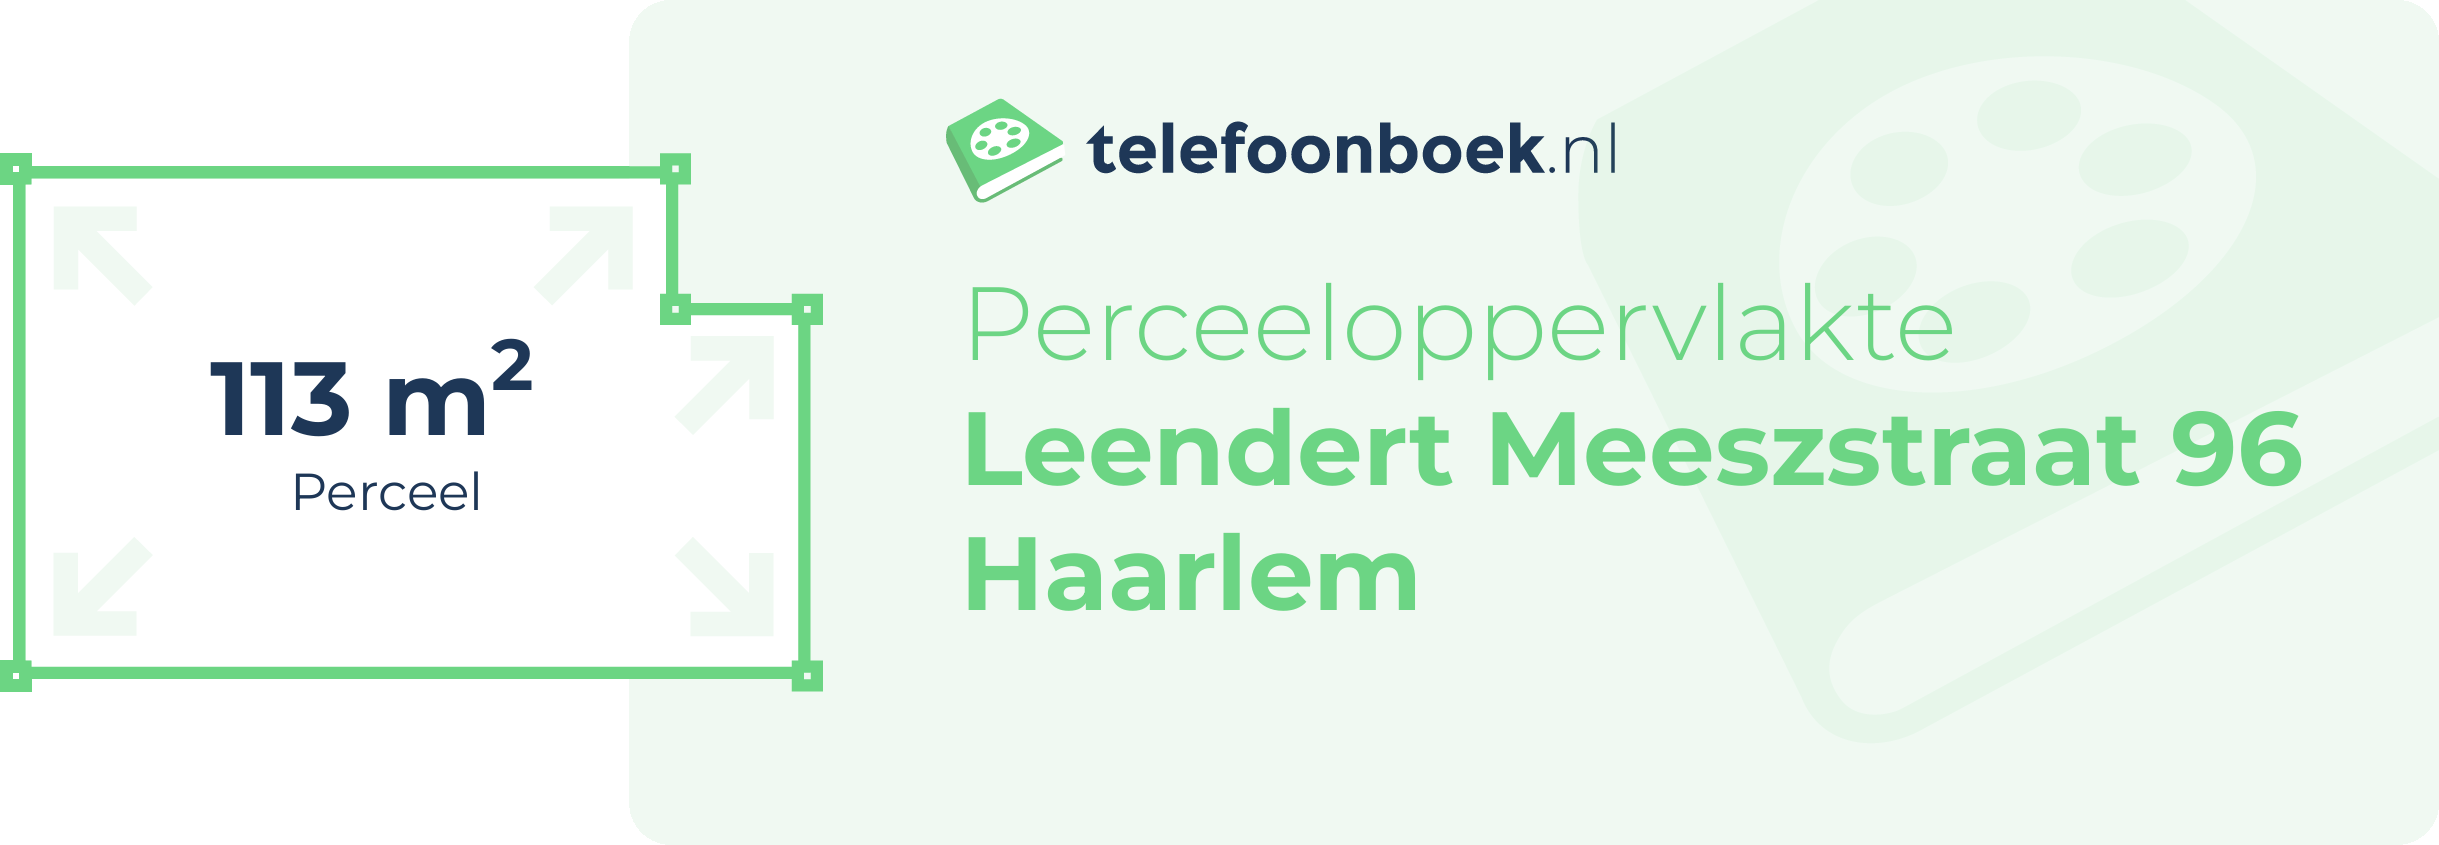 Perceeloppervlakte Leendert Meeszstraat 96 Haarlem